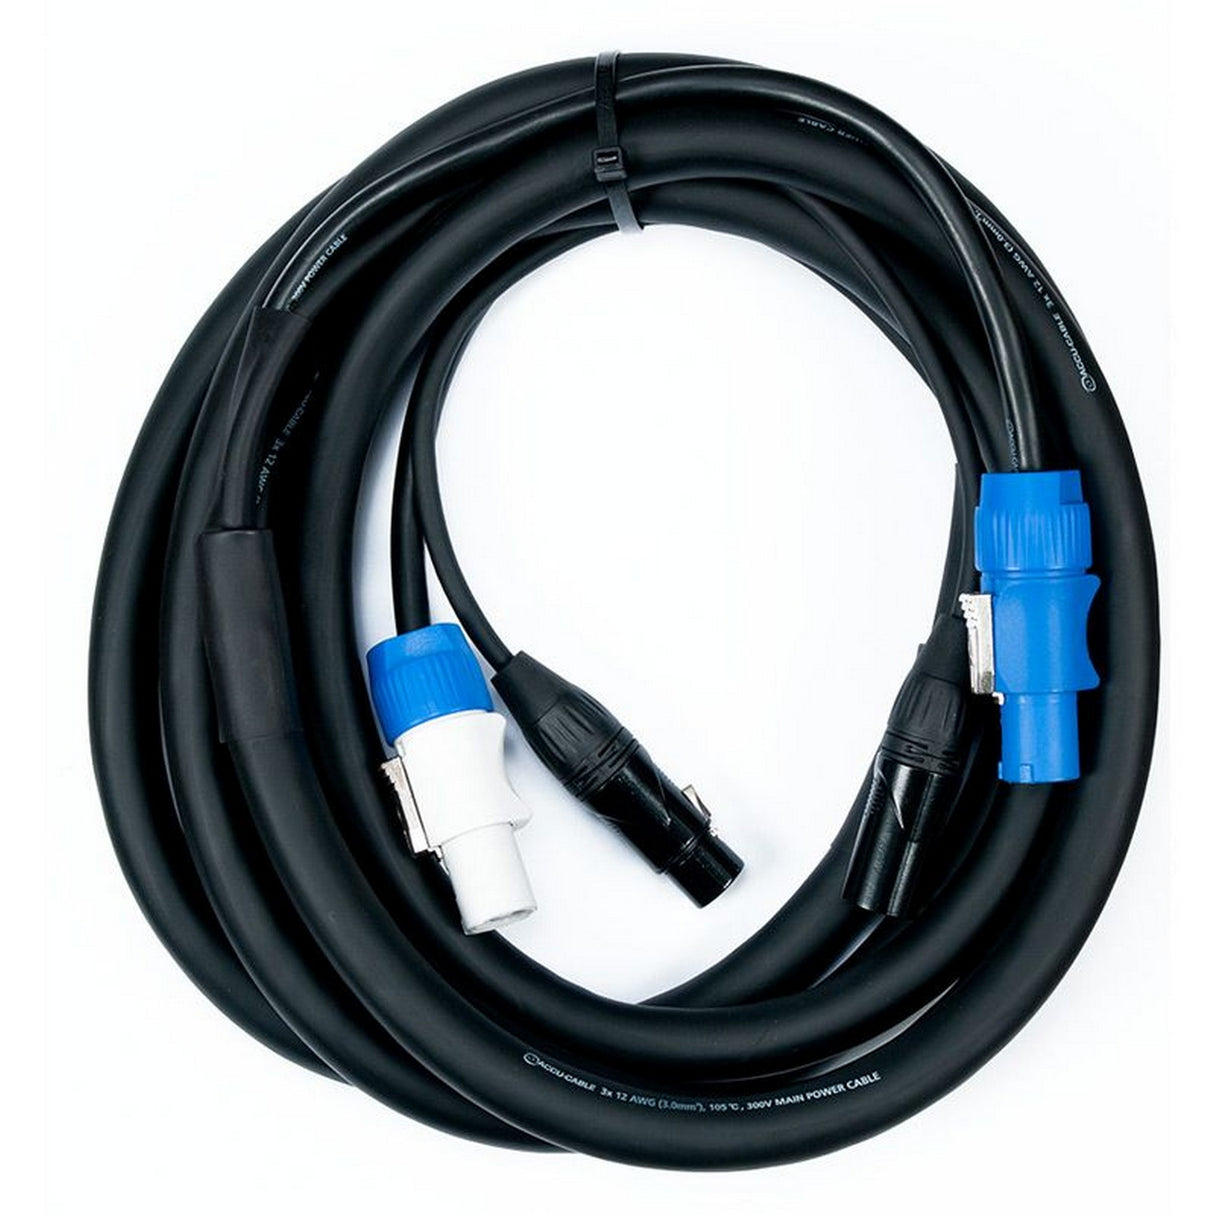 Accu Cable AC3PPCON12 3-Pin XLR DMX Locking Power Link Cable, 12-Feet